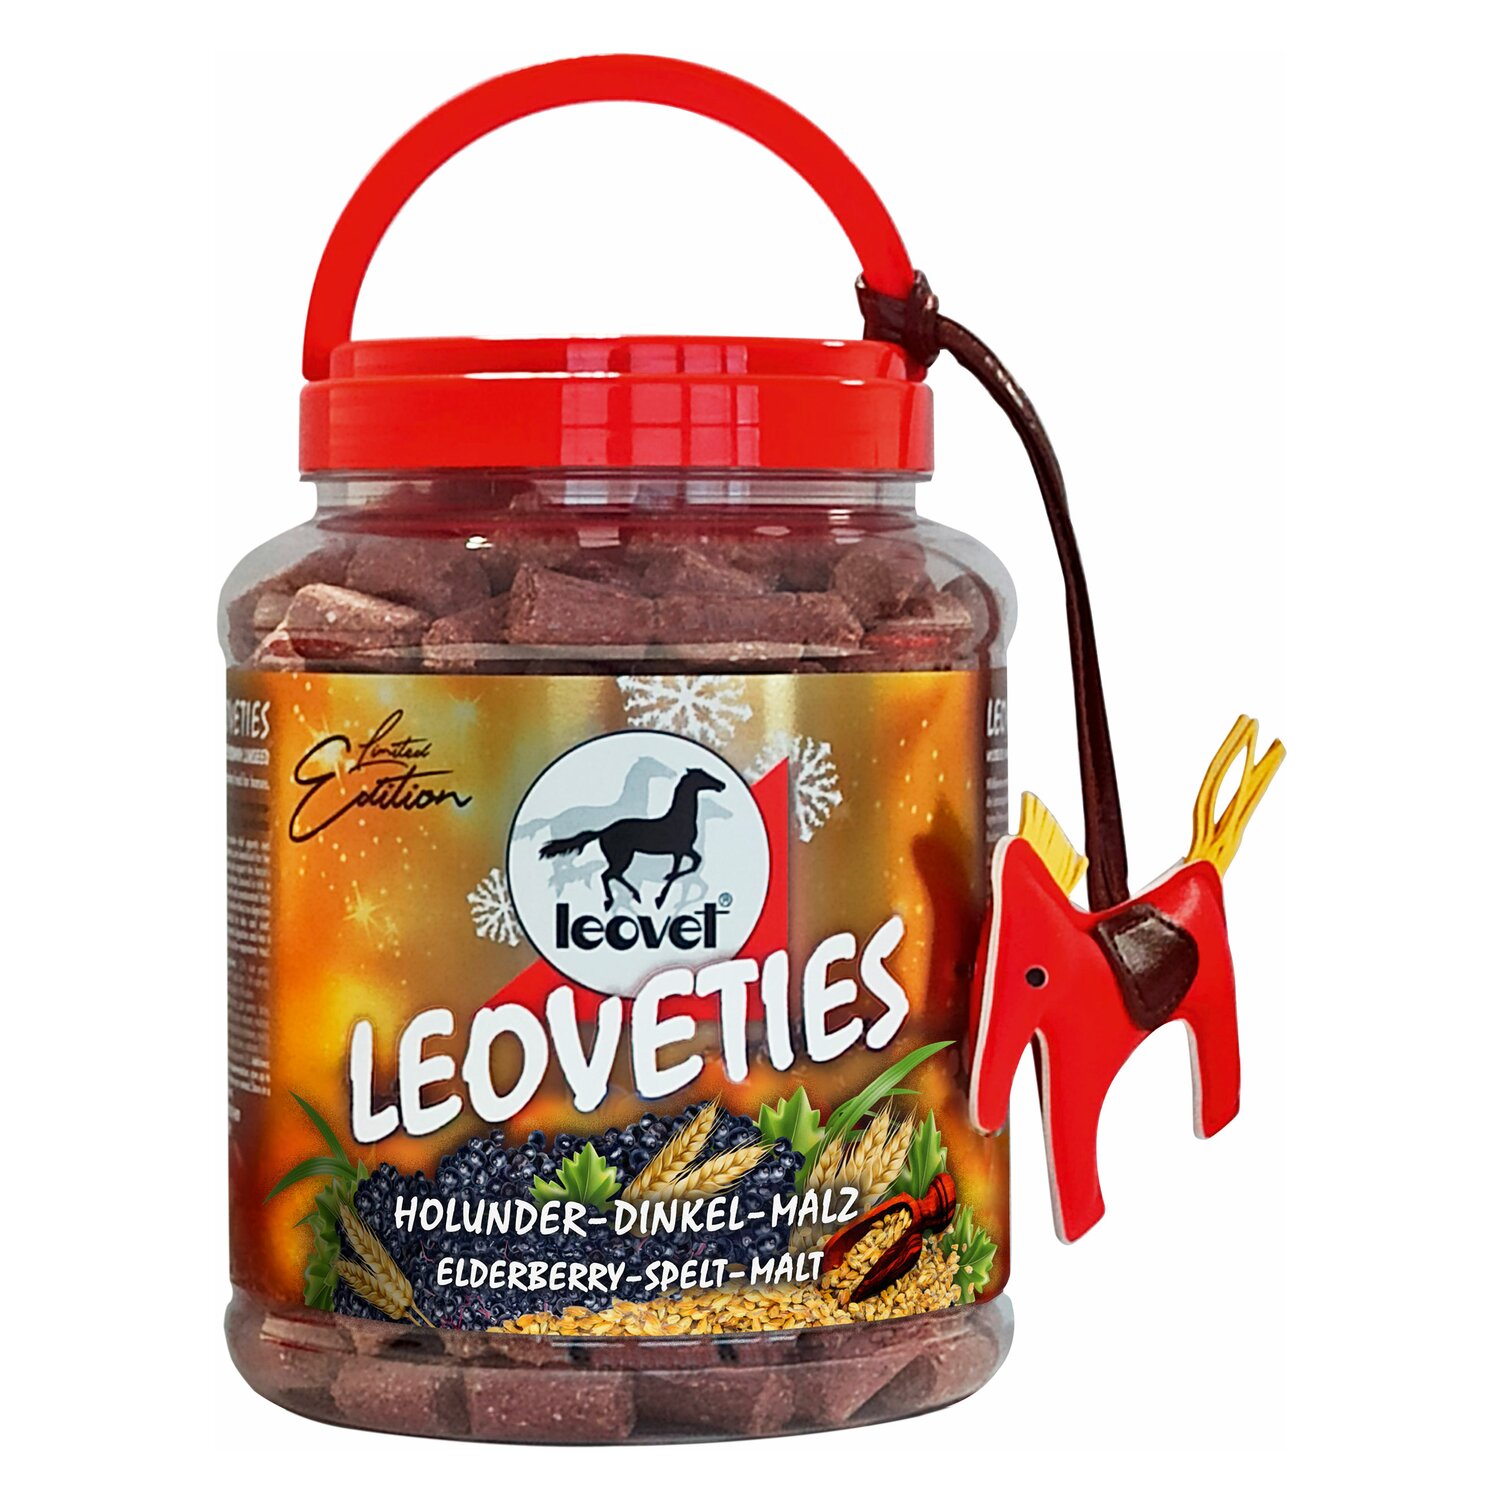 Leovet Leoveties Limited Edition